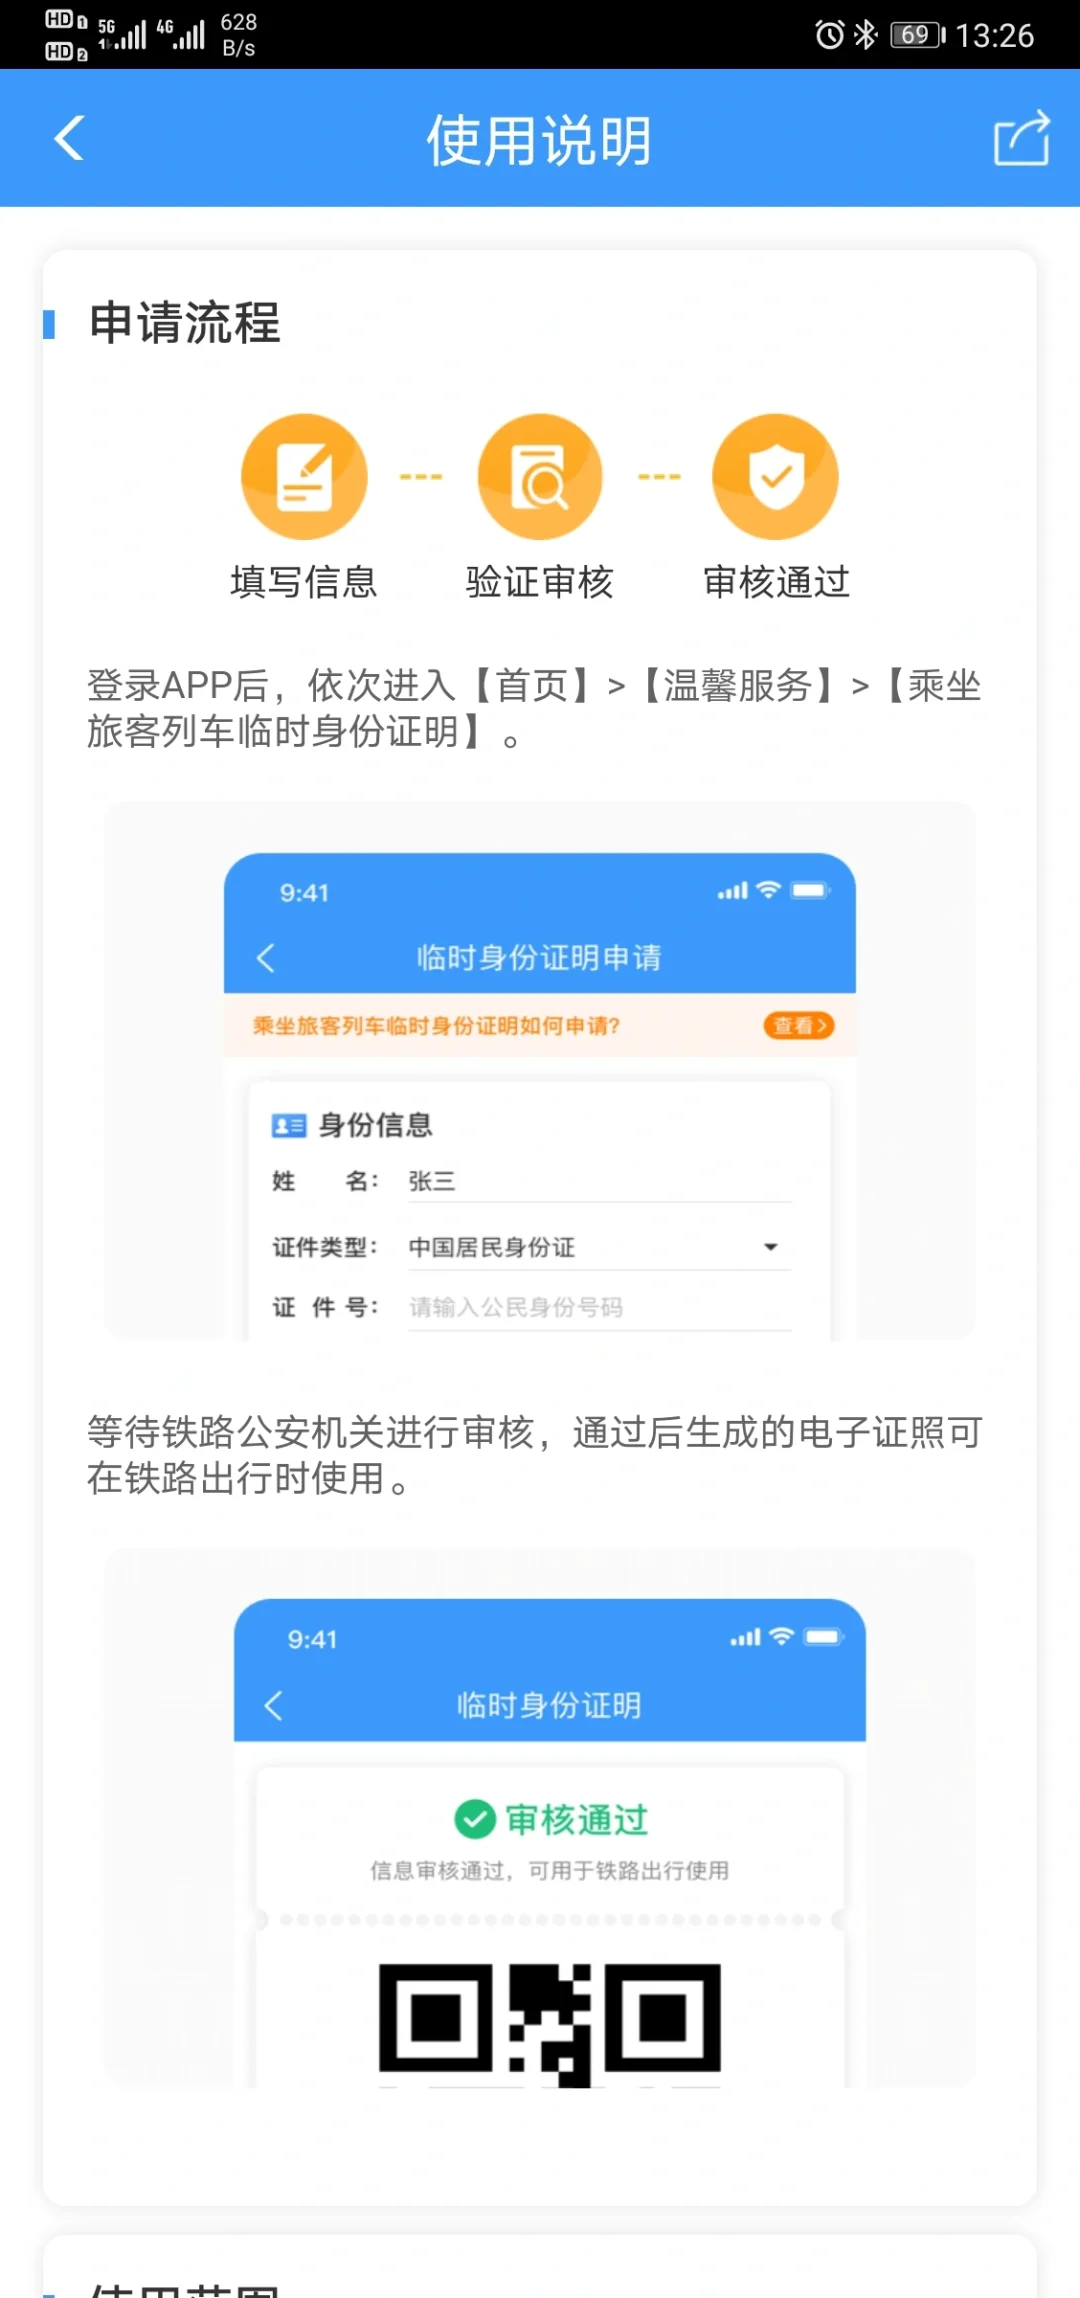 12306 app可办临时身份证进高铁/火车站